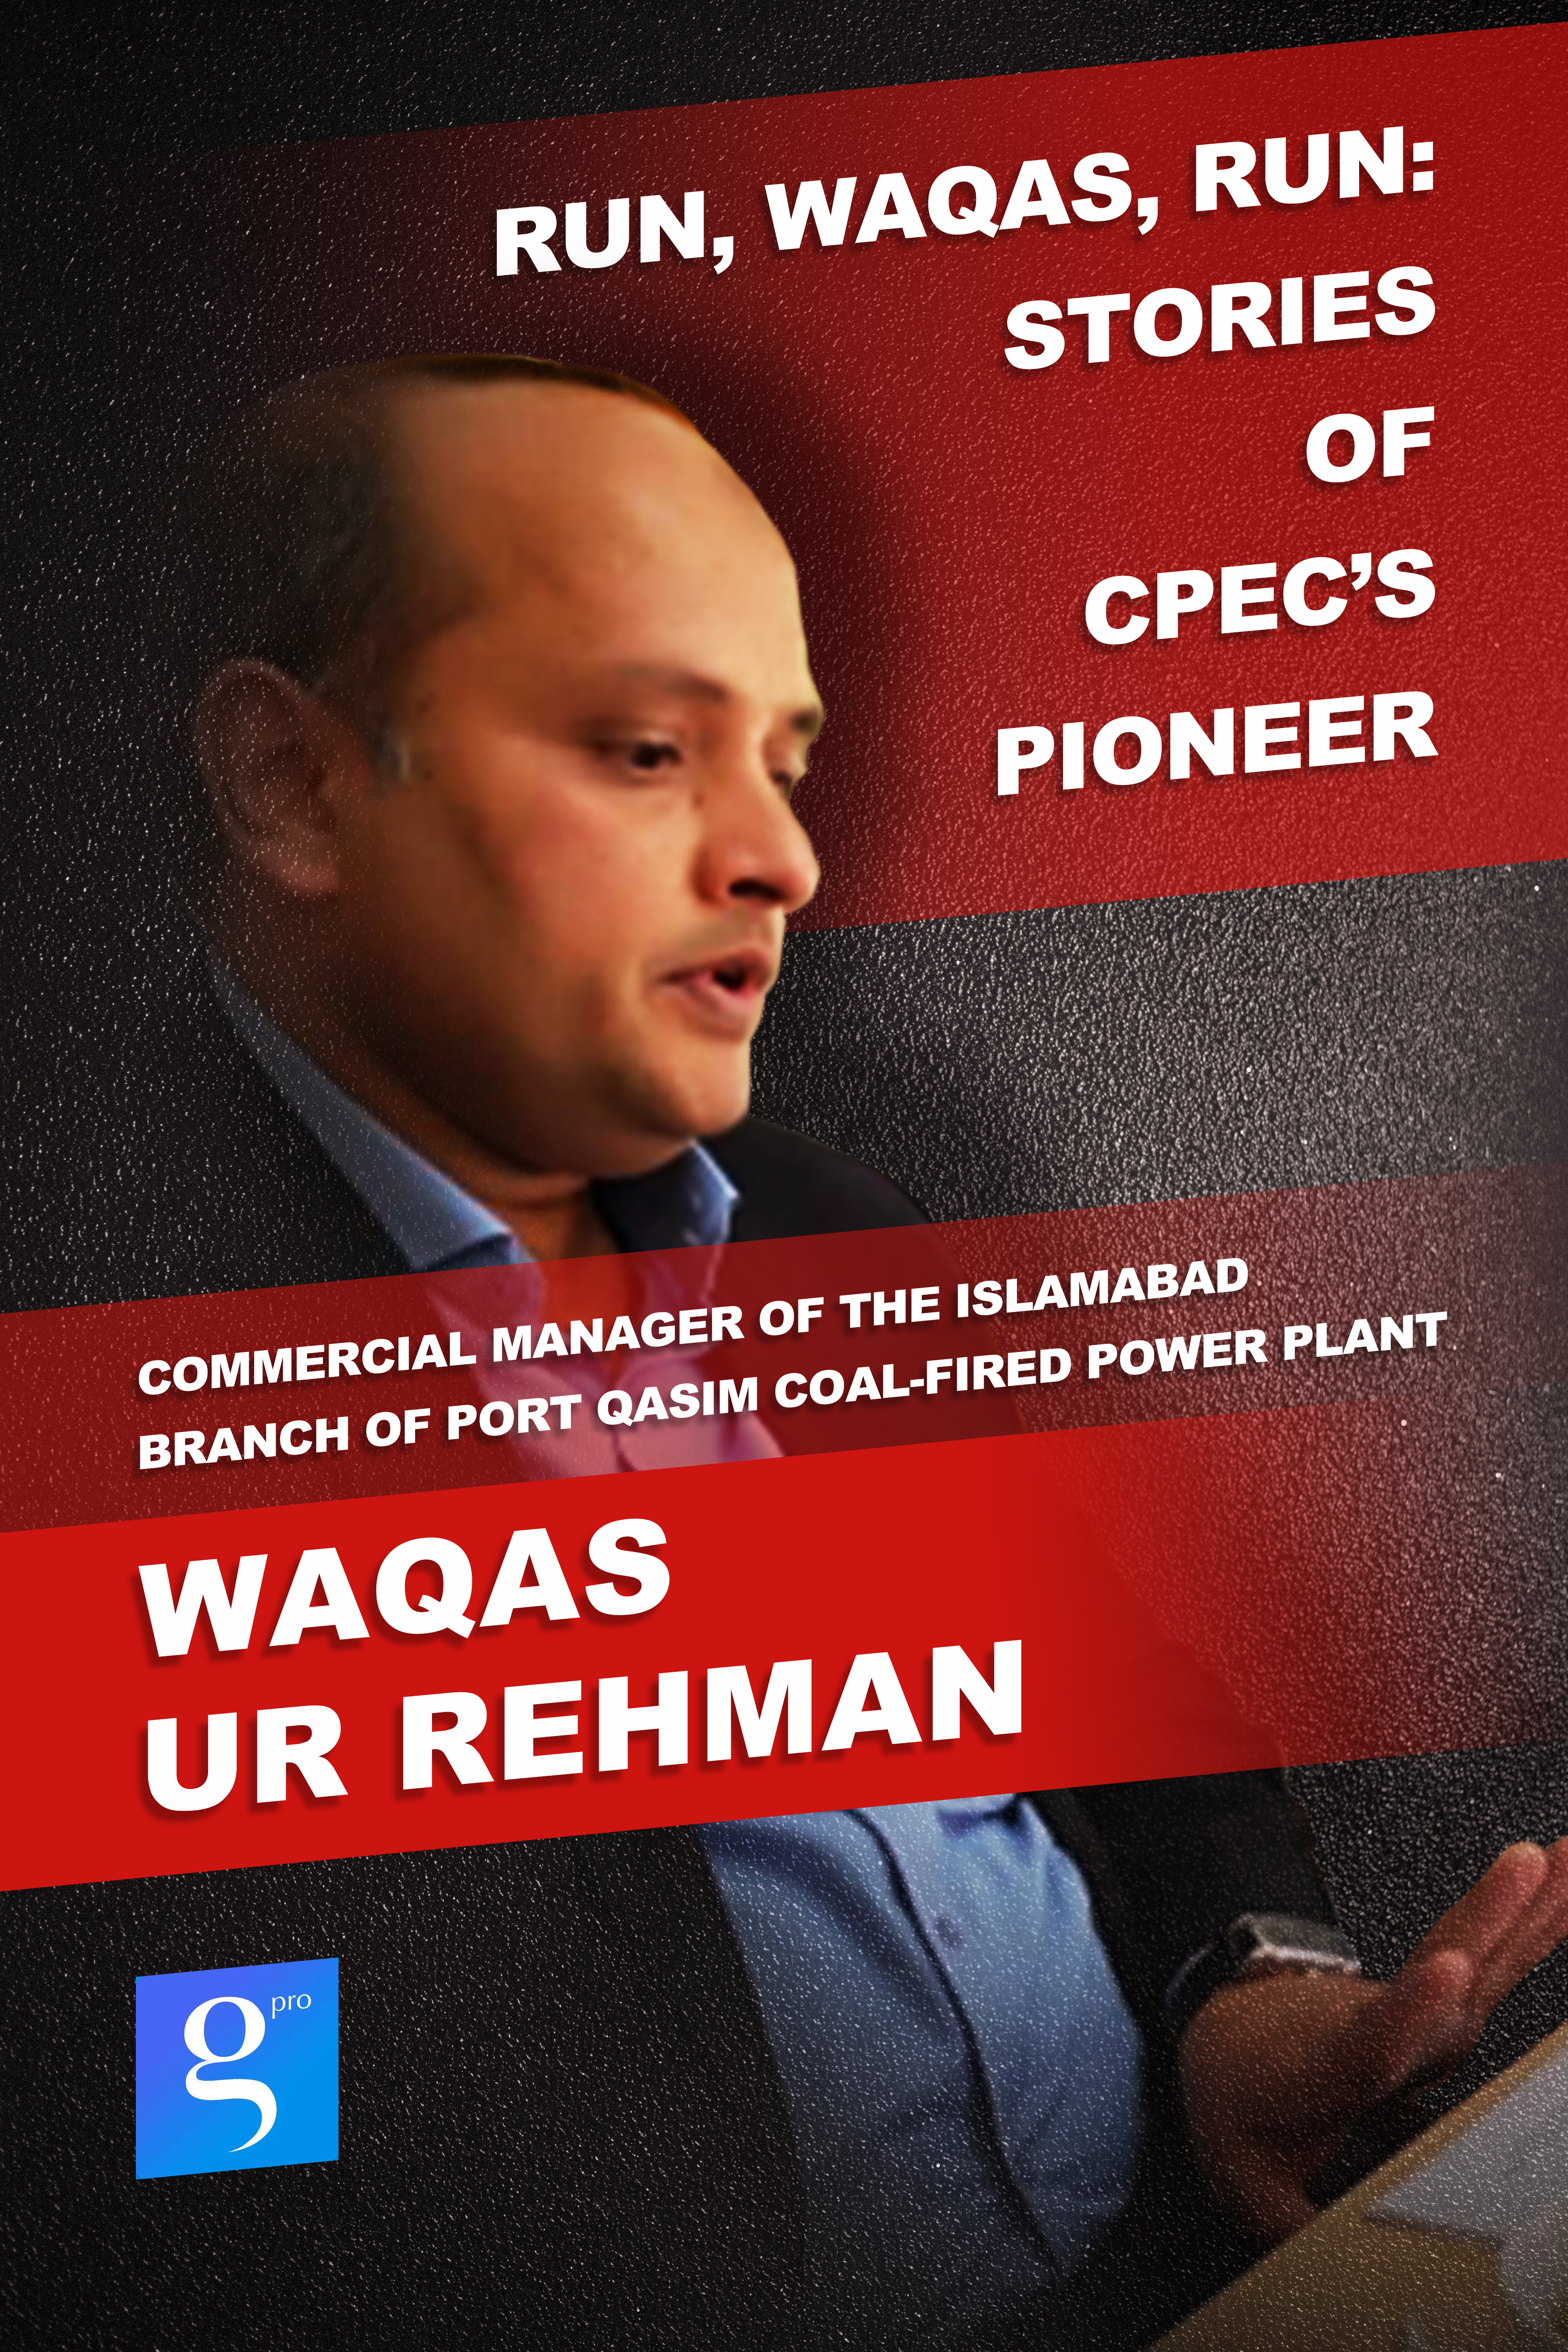 Run, Waqas, Run: Stories of CPEC’s Pioneer